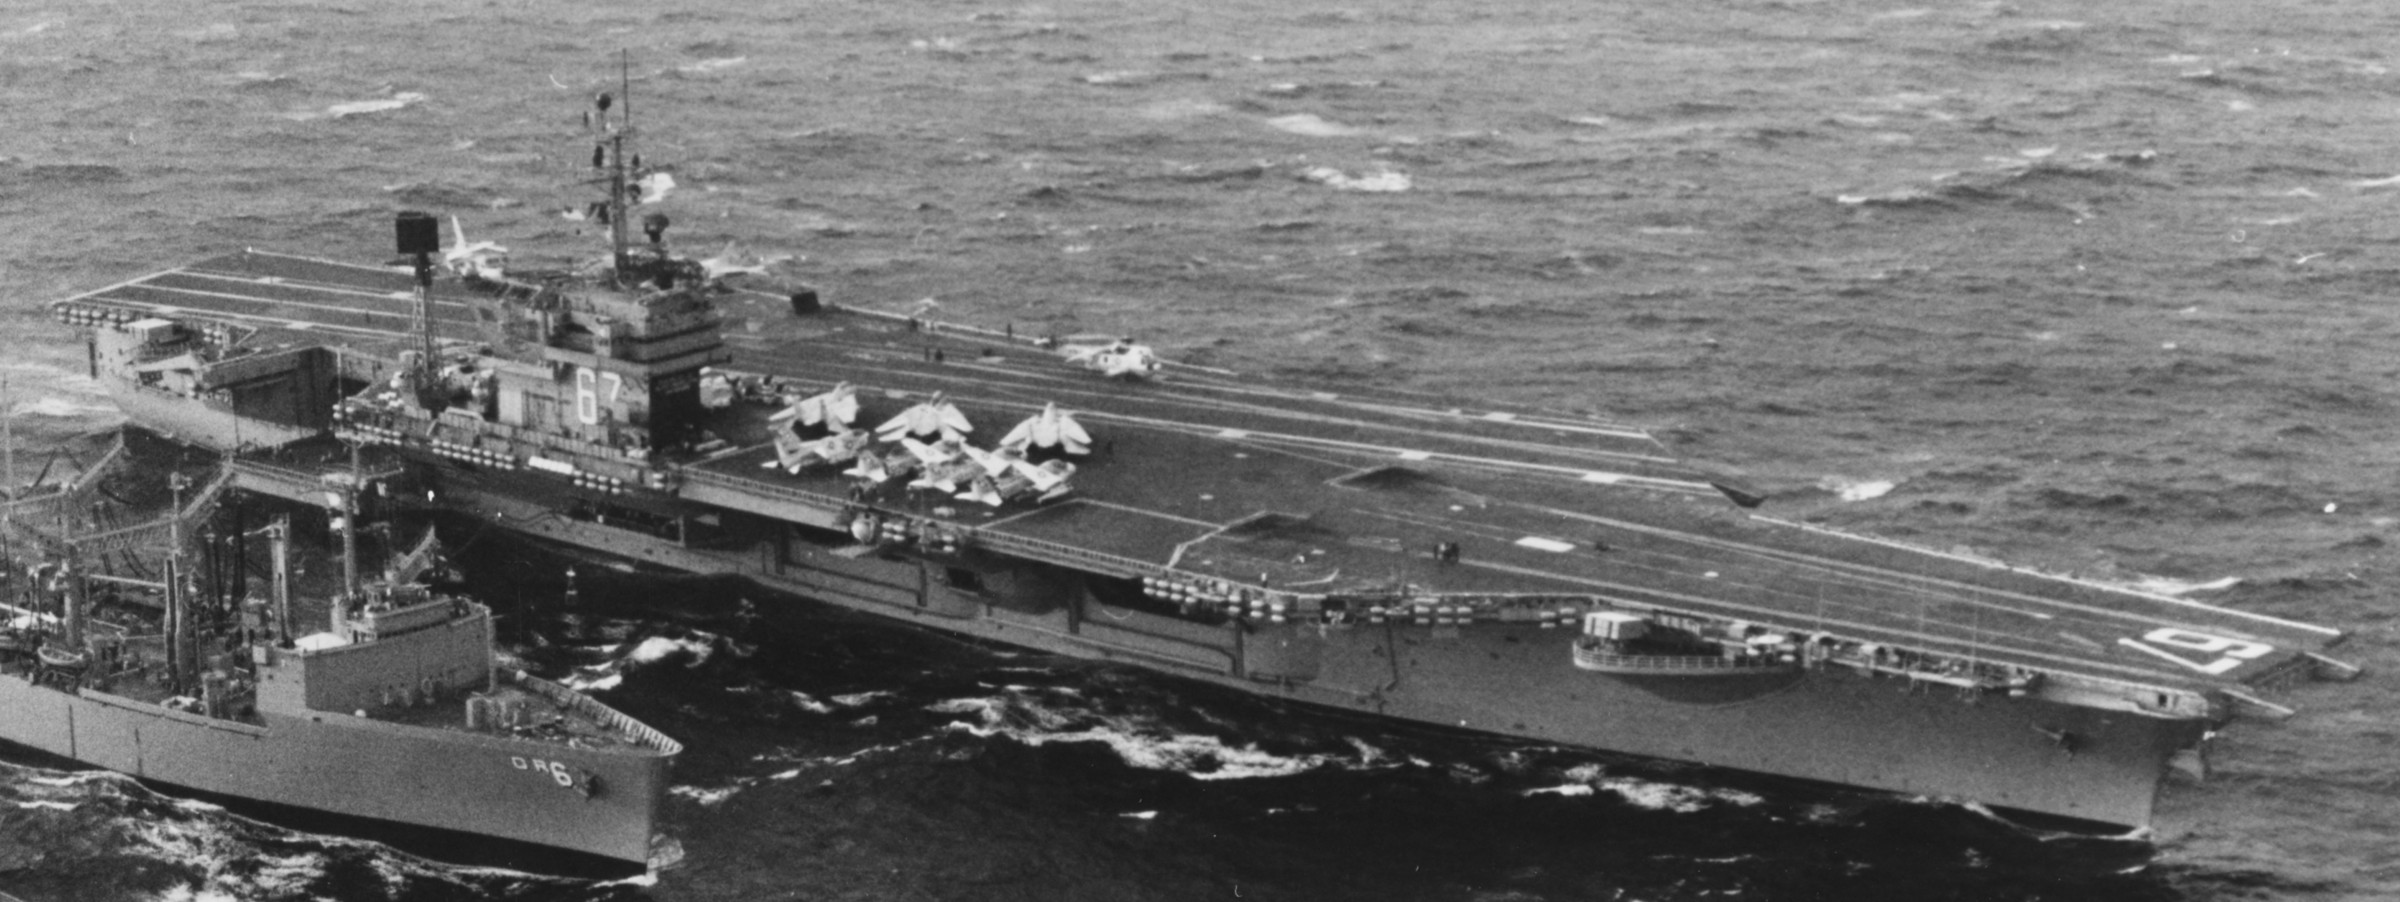 cv-67 uss john f. kennedy aircraft carrier atlantic ocean 1978 58